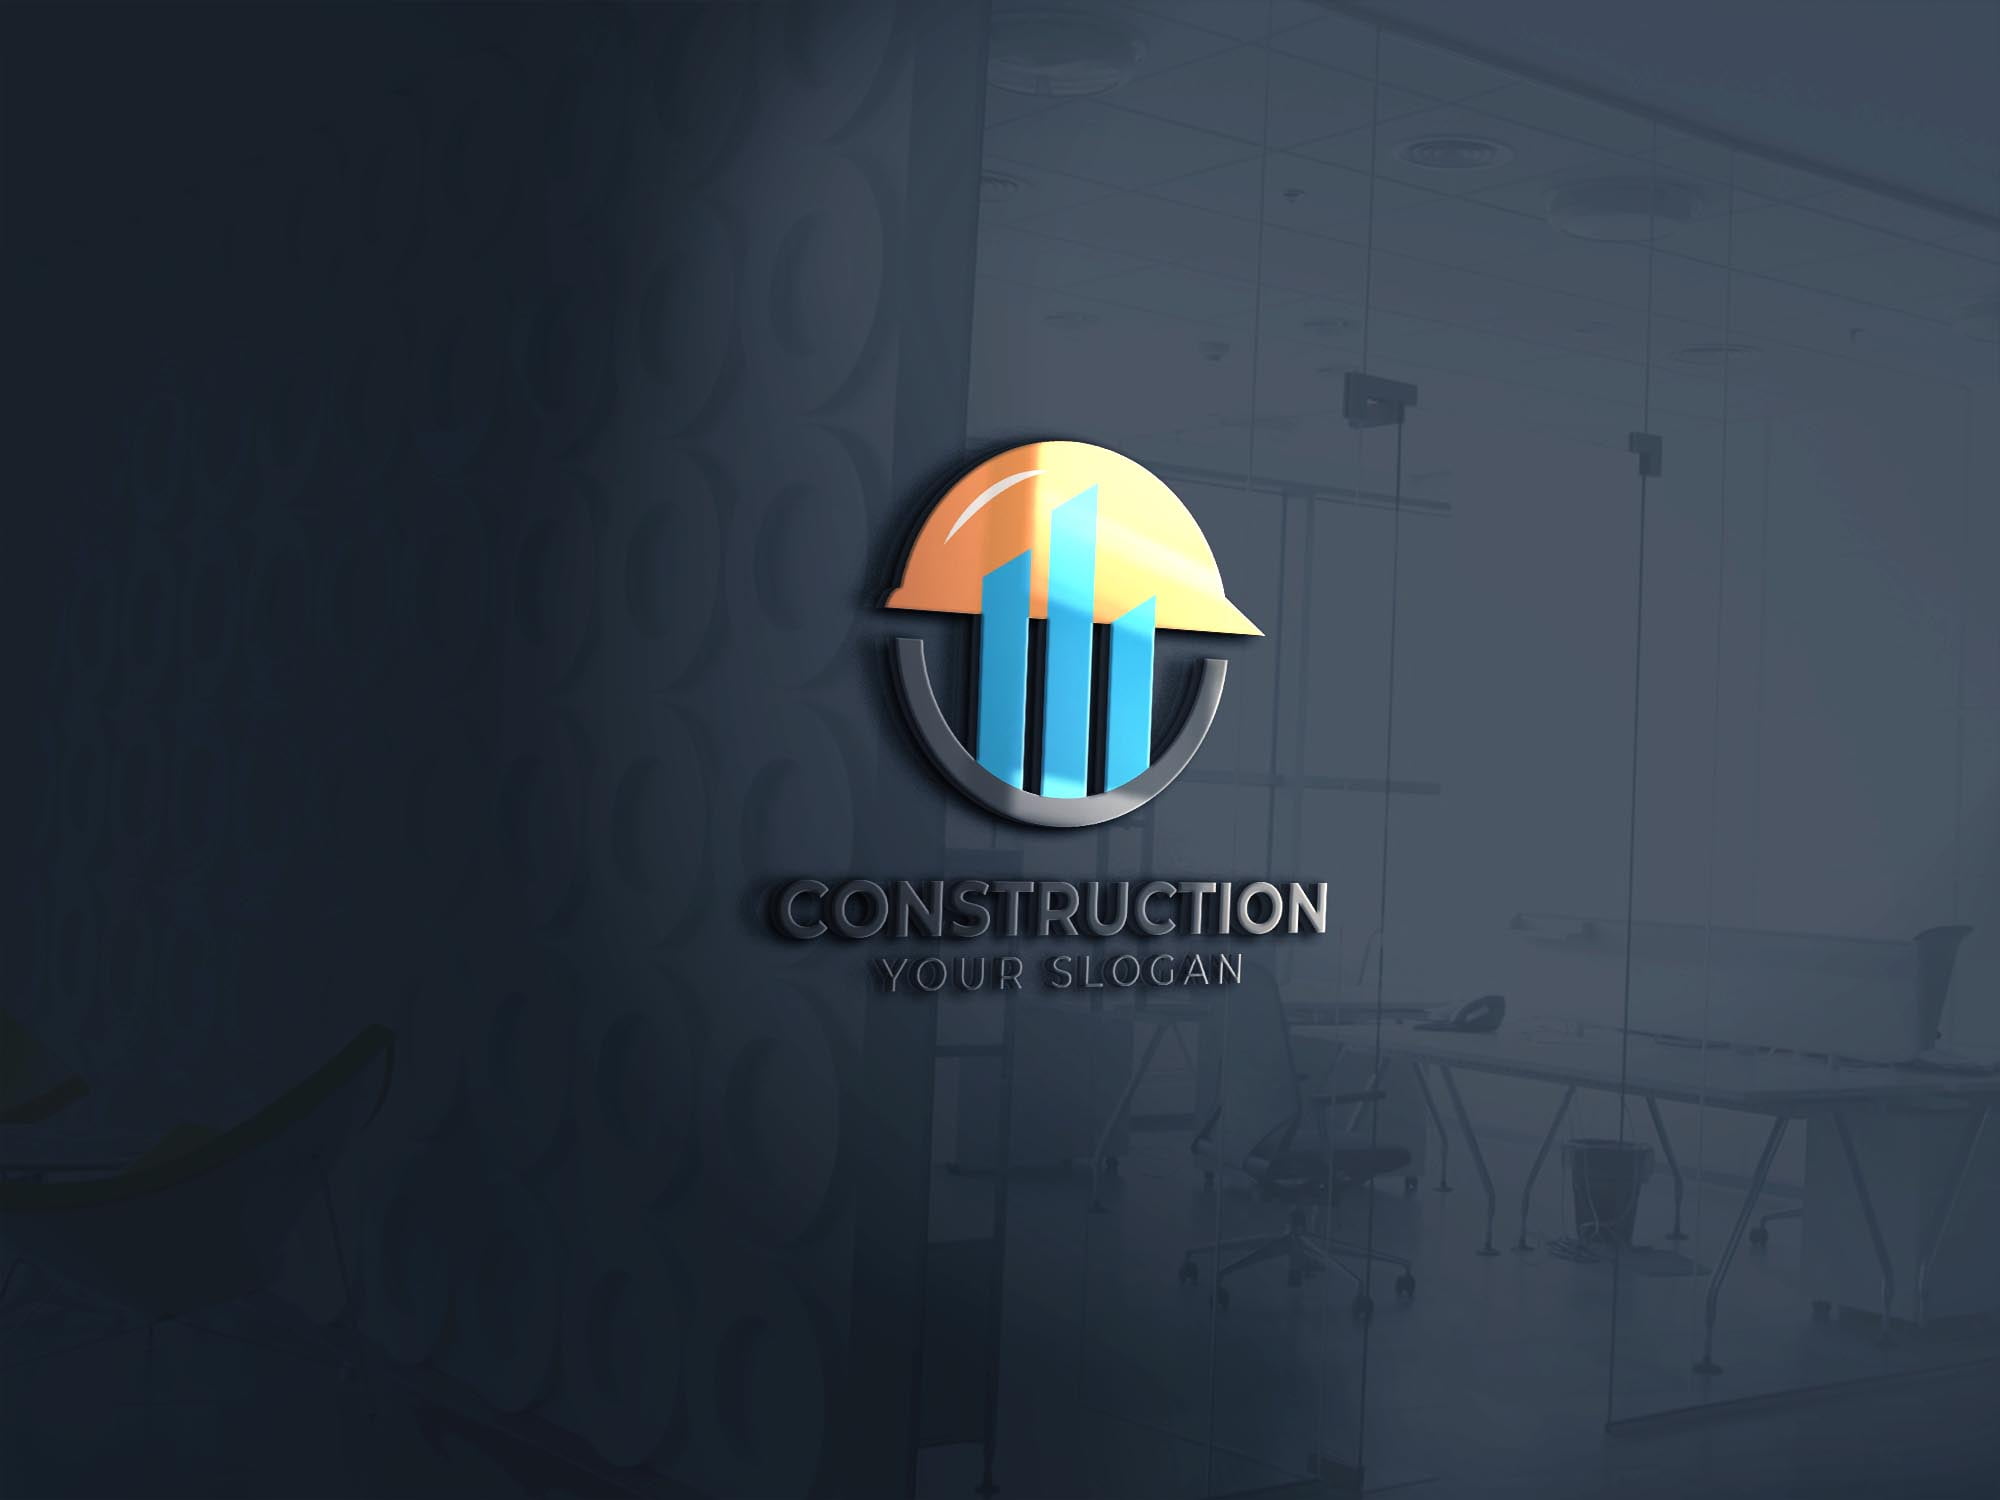 FREE CONSTRUCTION LOGO DESIGN